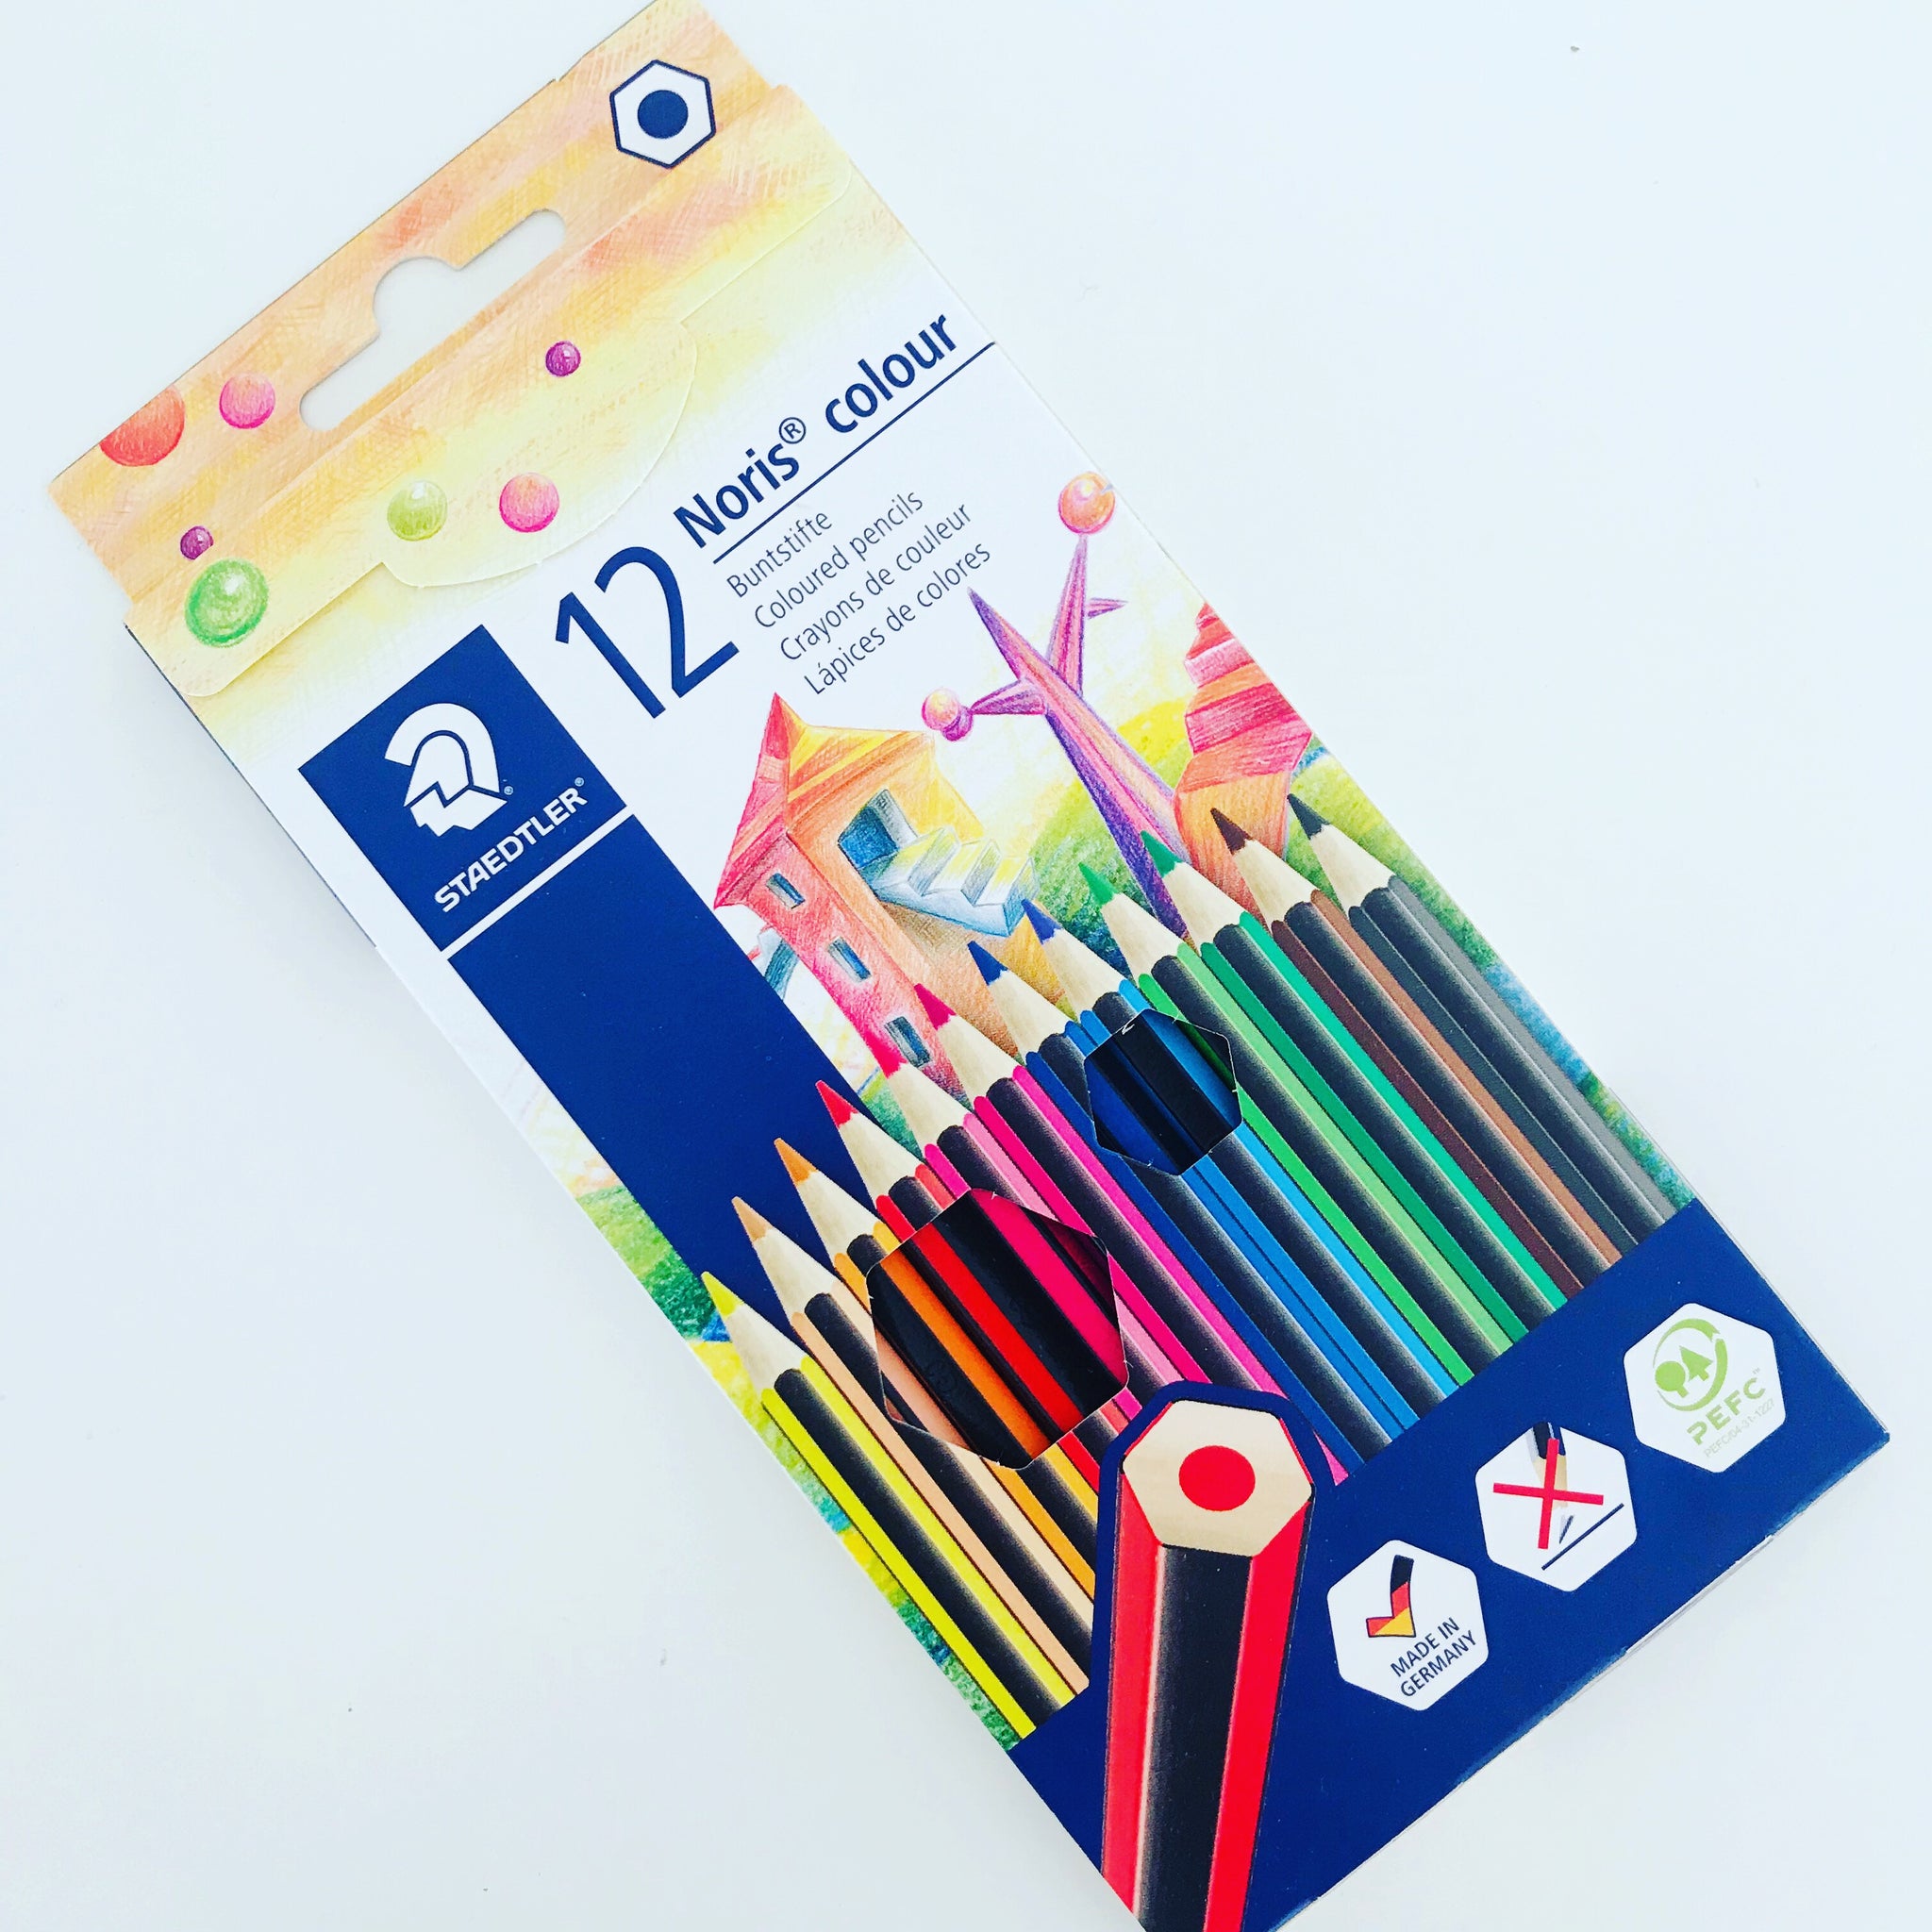 Lápis de cor Staedtler wopex ecologico 12 cores ... Colouring pencils Staedtler wopex ecologic 12 colours